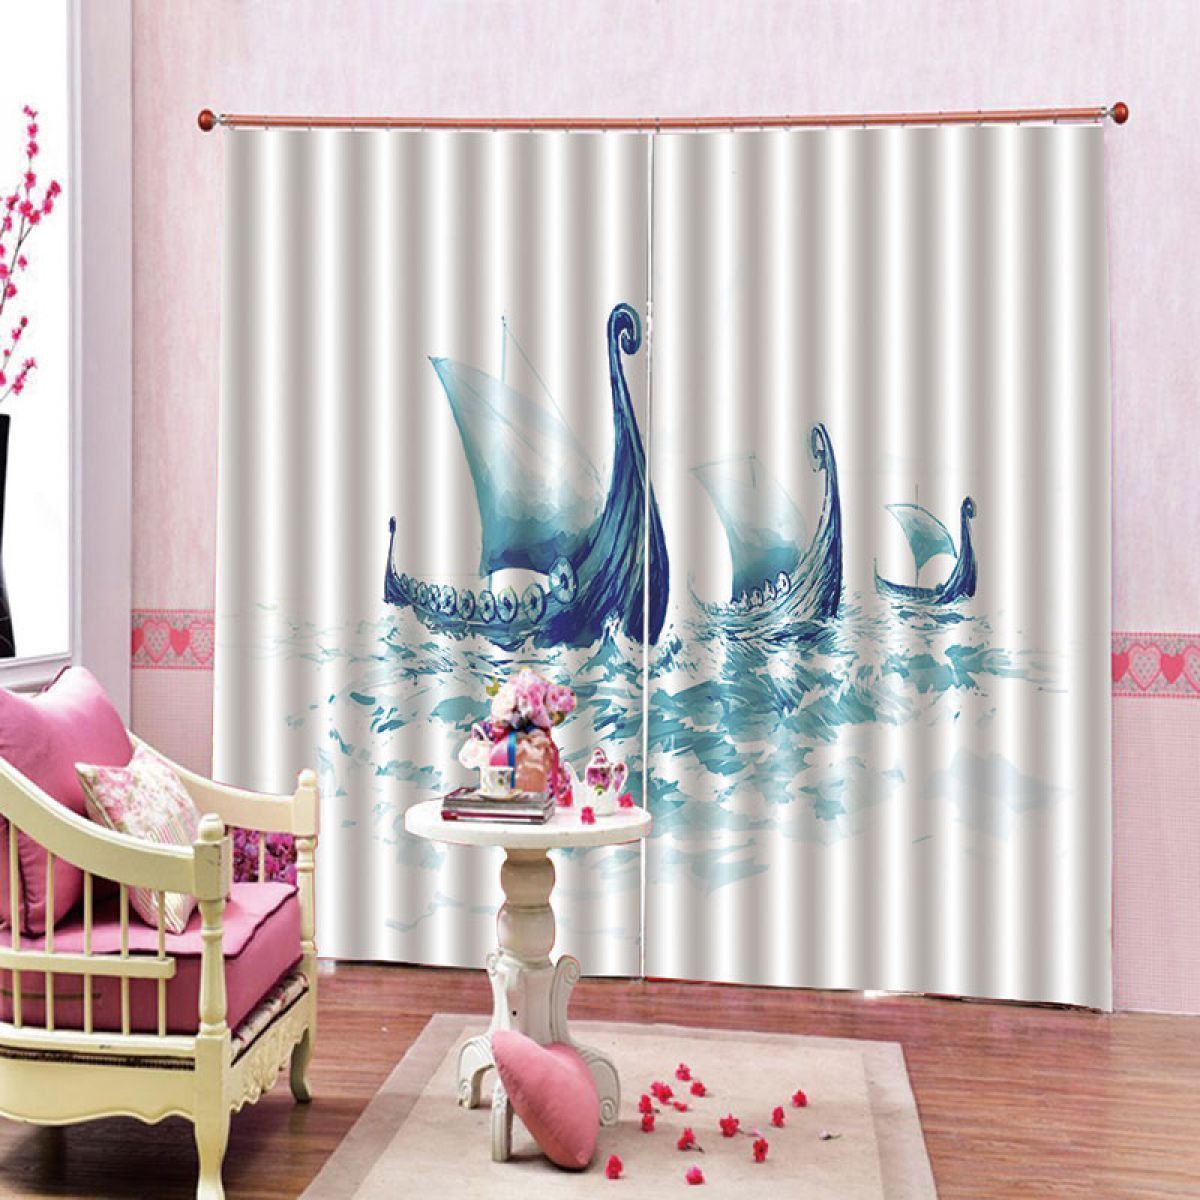 3d sailboat printed window curtain home decor 7262